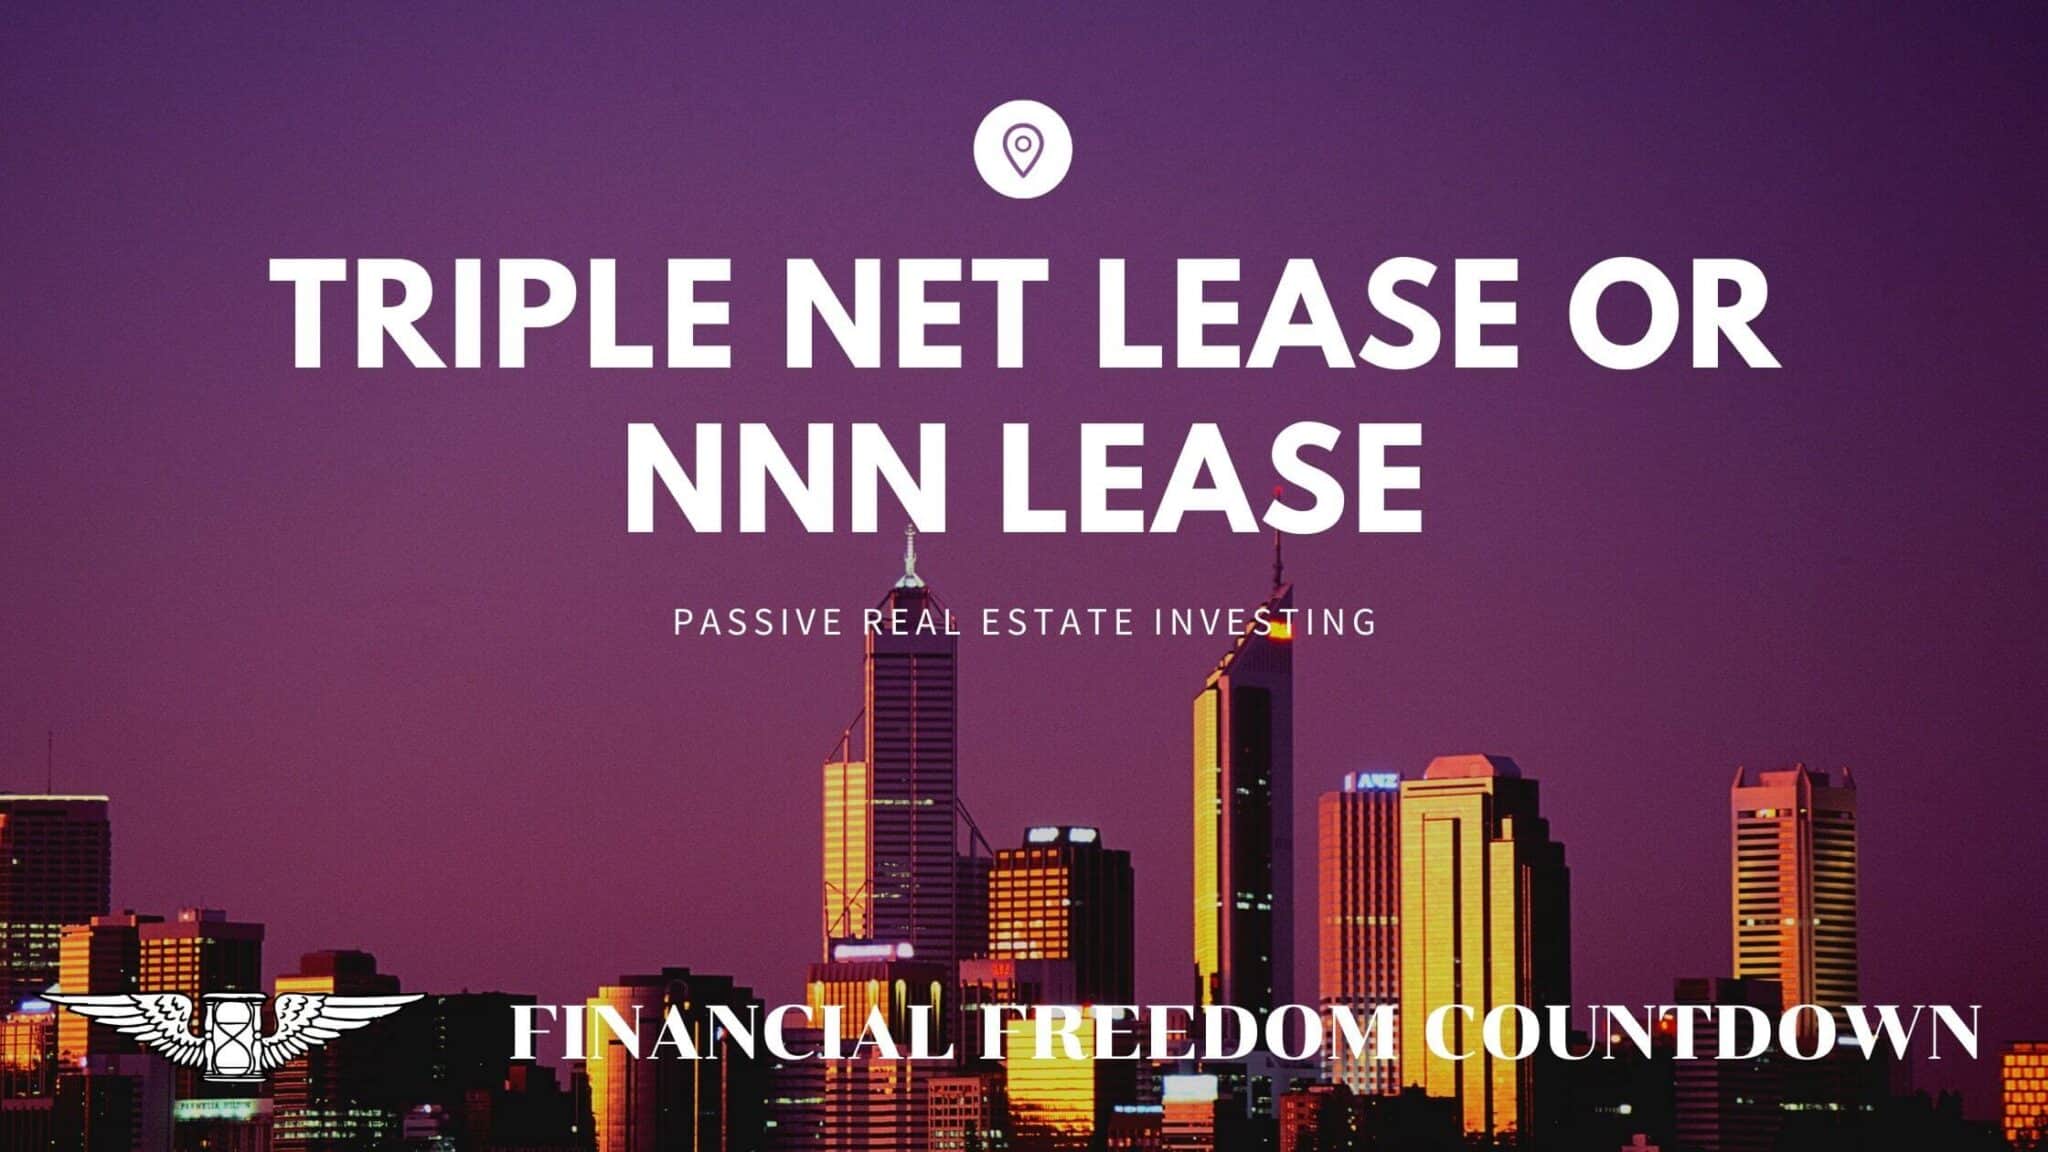 What Is A Triple Net Lease Or NNN Lease Financial Freedom Countdown